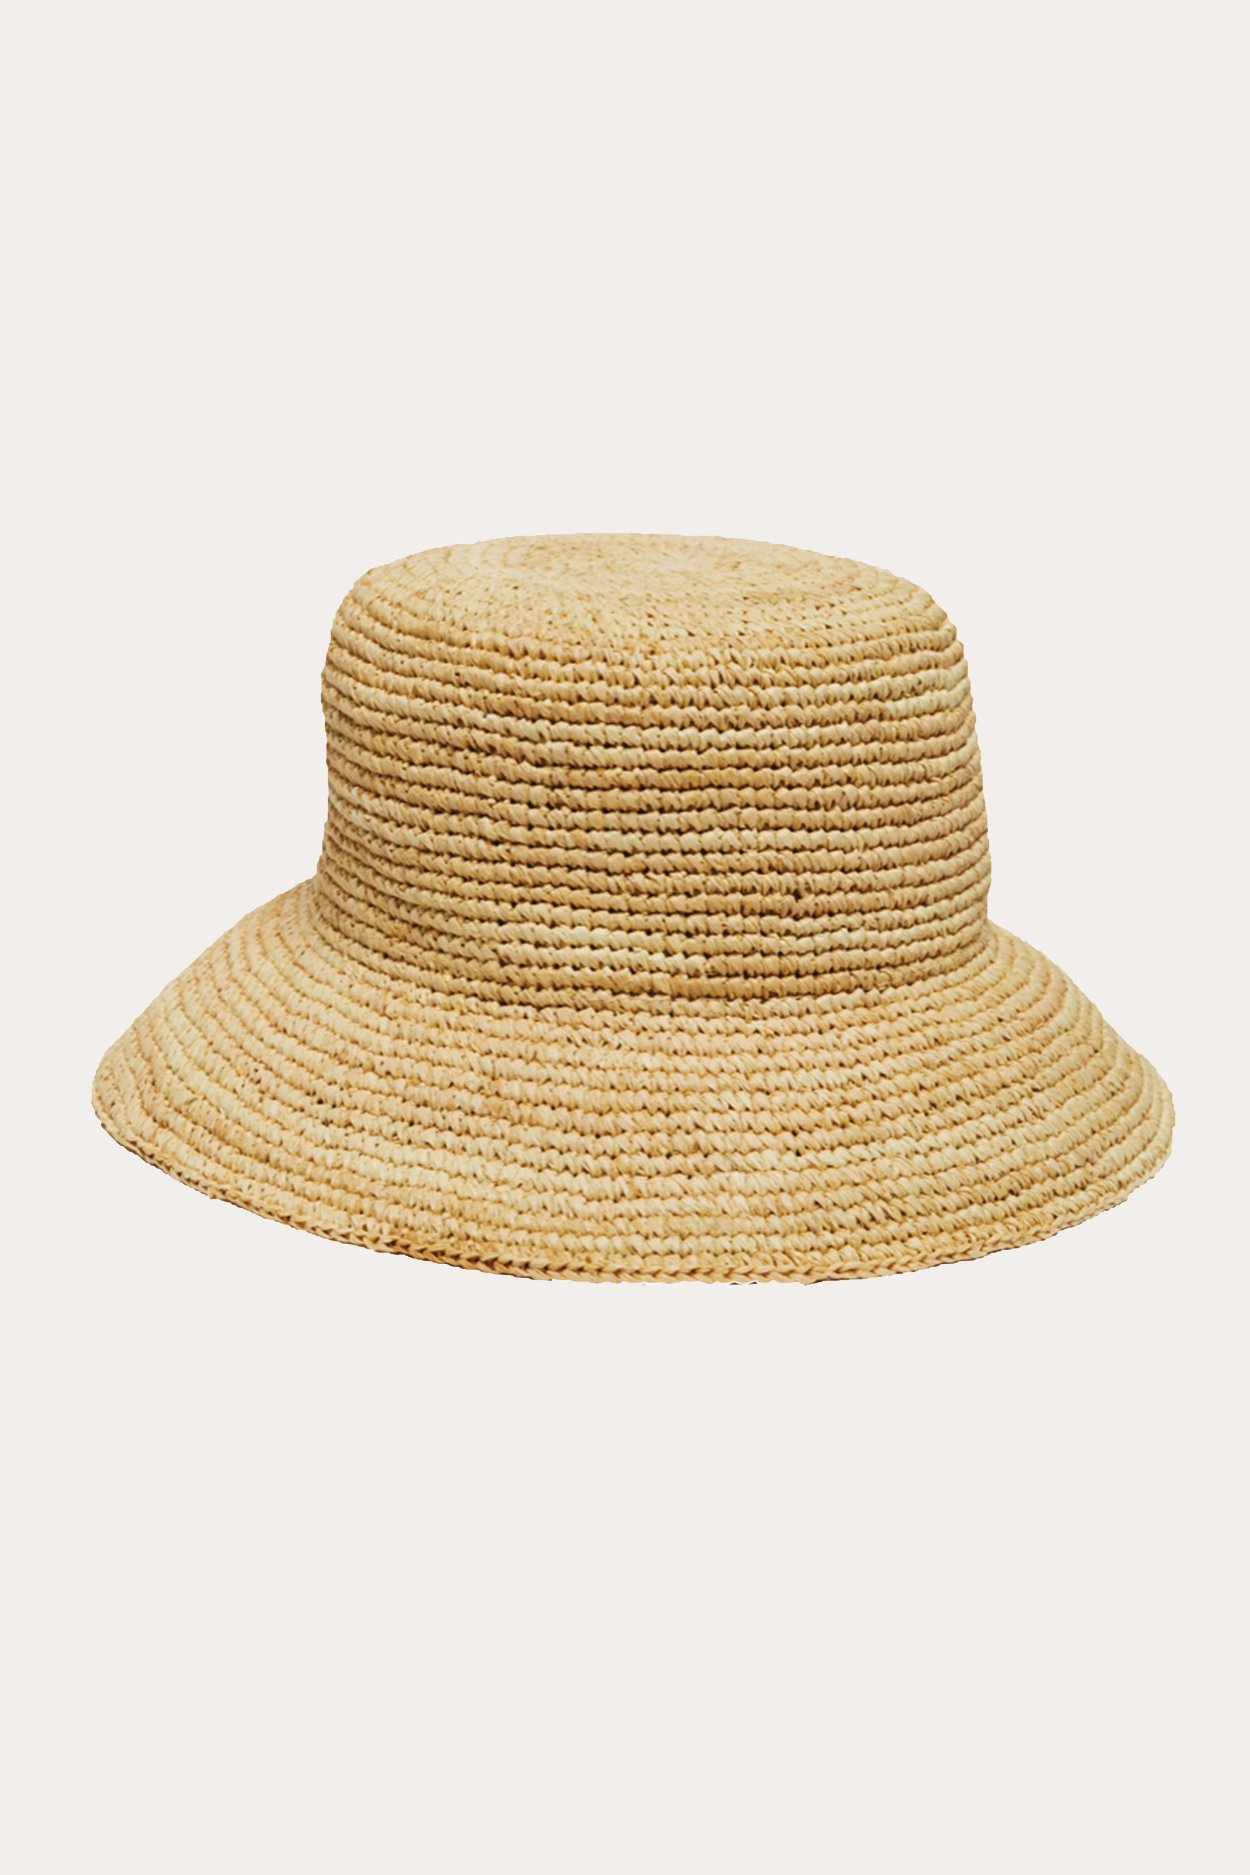 A straw bucket hat